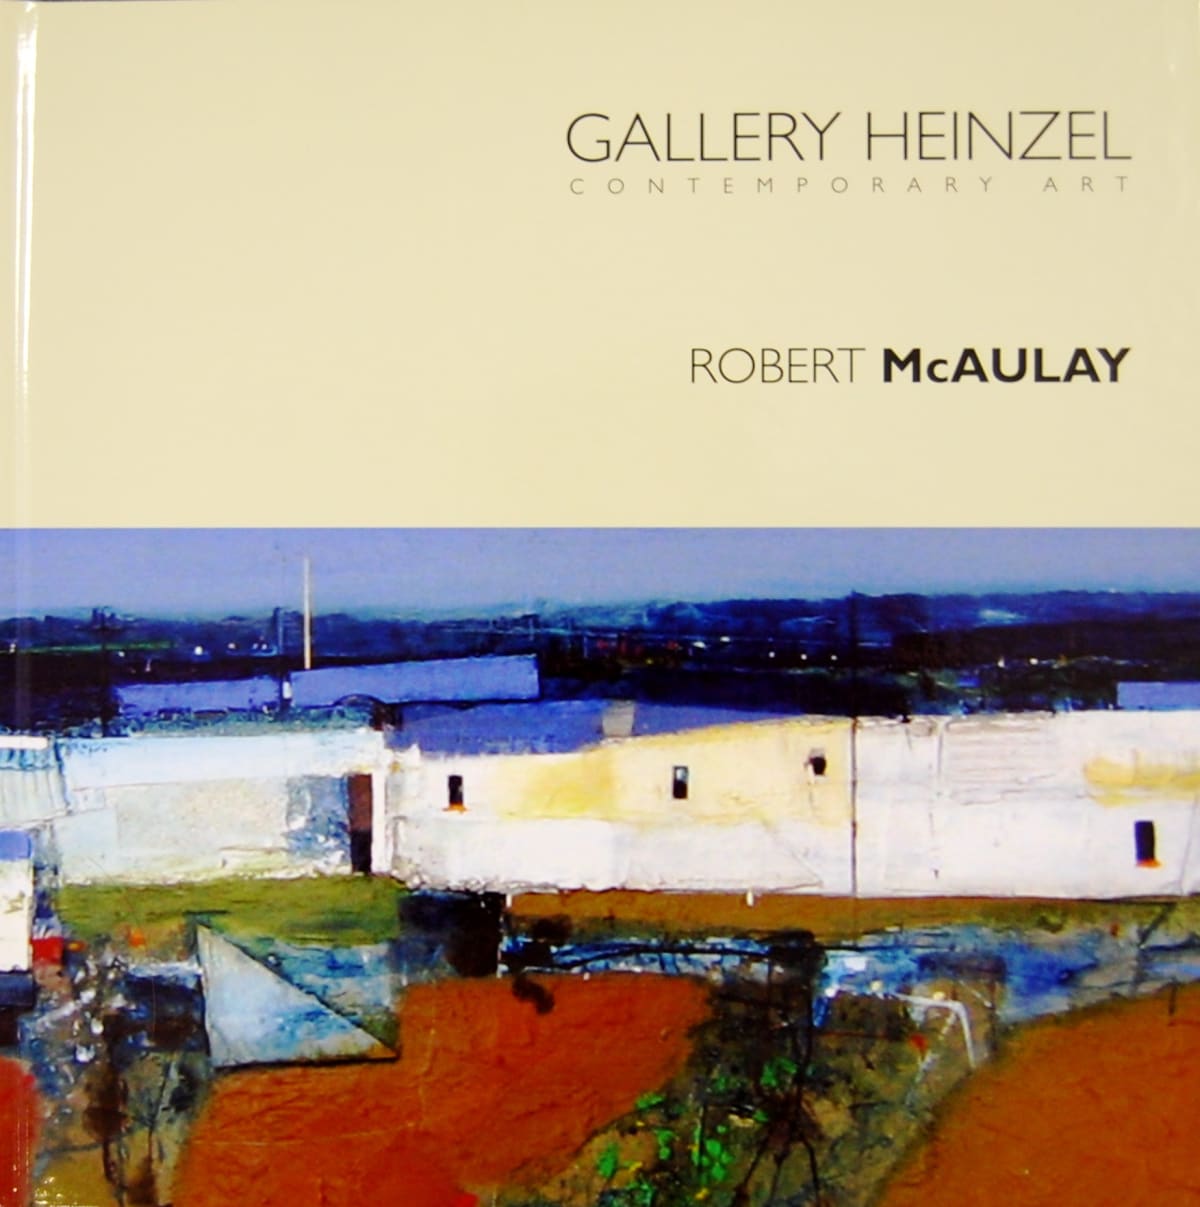 Gallery Heinzel presents ROBERT McAULAY